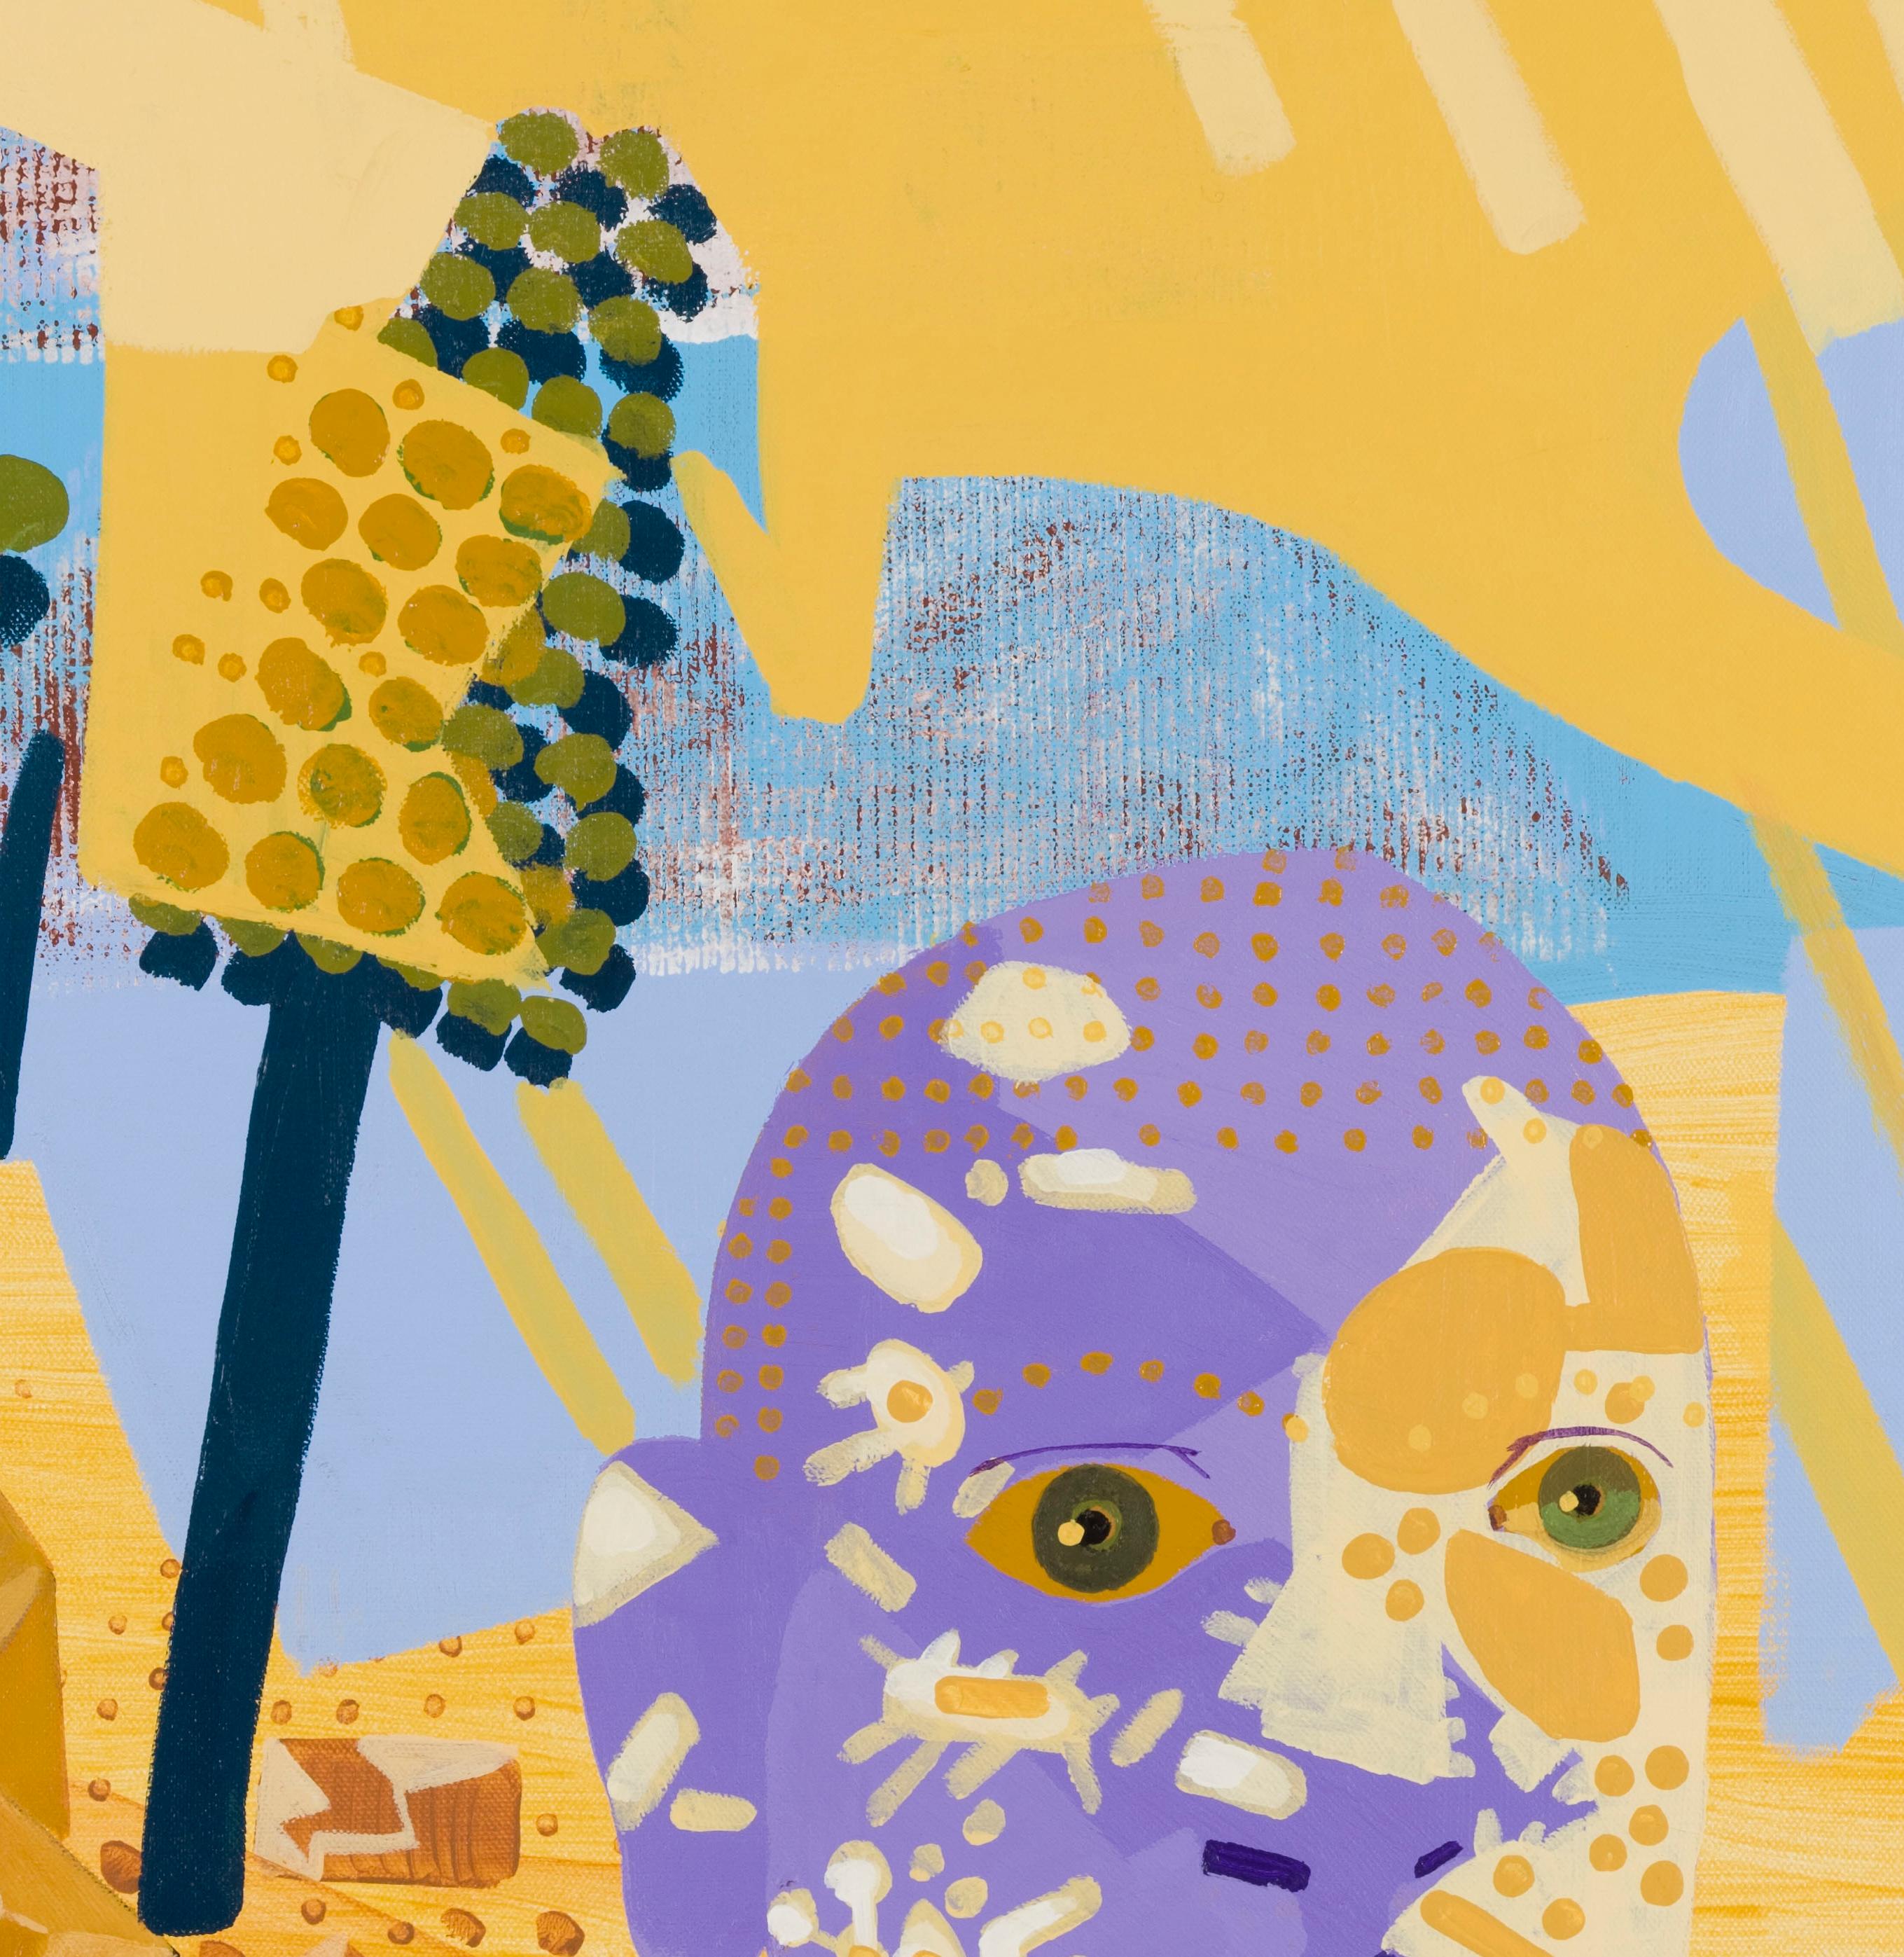 Süd-/Südamerika, 21. Jahrhundert, Sommer, Gelb, Bäume, Blau, Mann, Landschaft (Grau), Figurative Painting, von Alexandru Rădvan